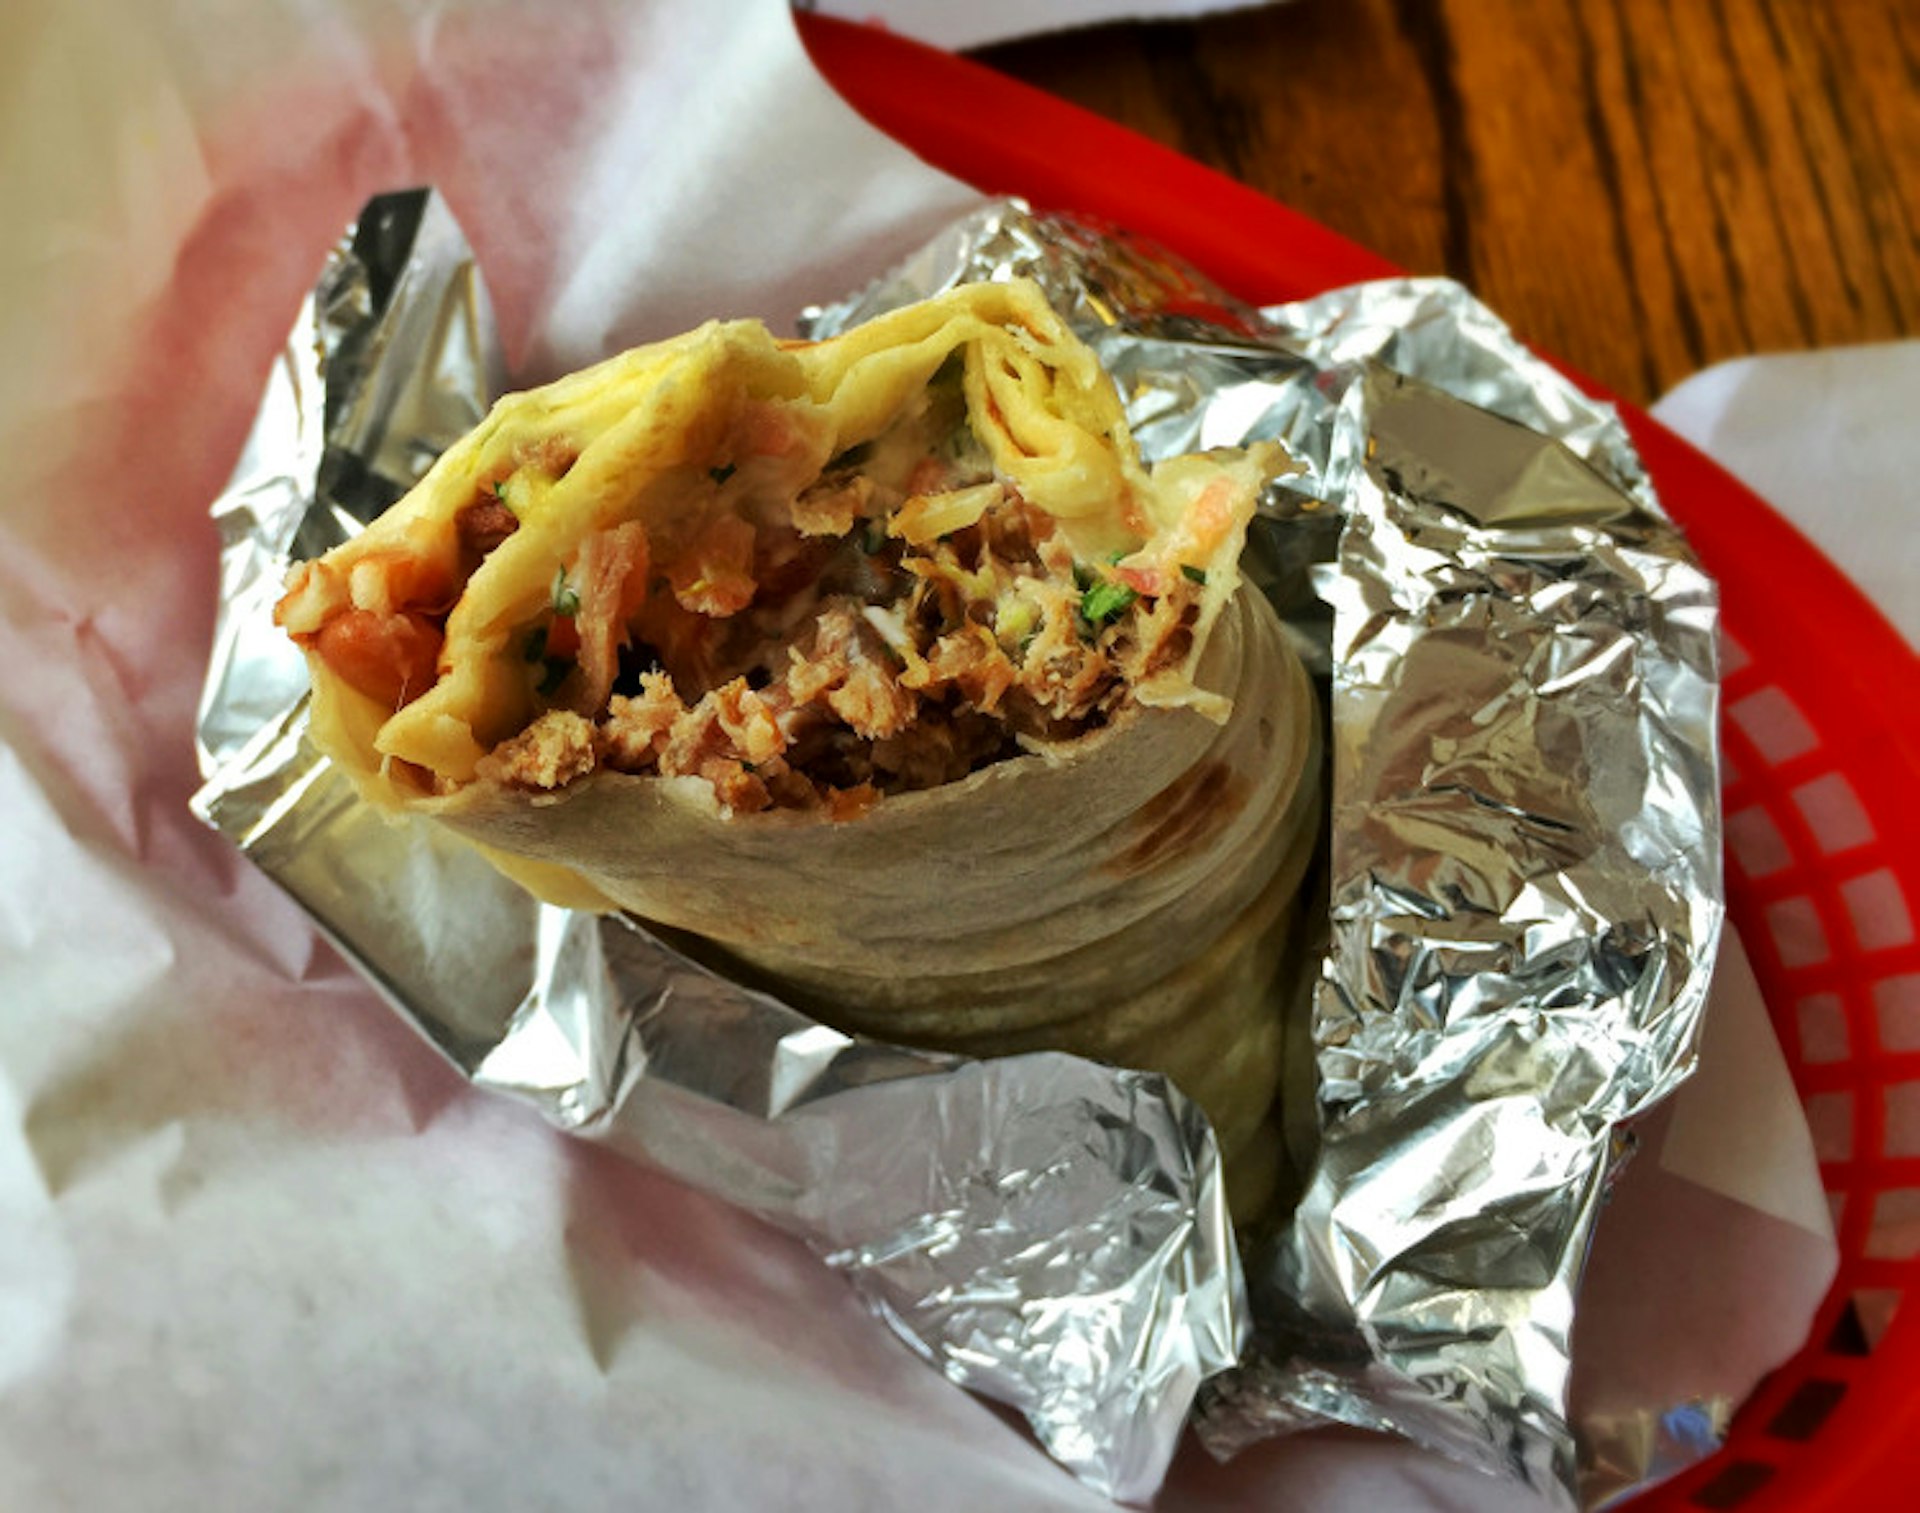 No better burrito than at La Taqueria. Image by T. Tseng / CC BY 2.0